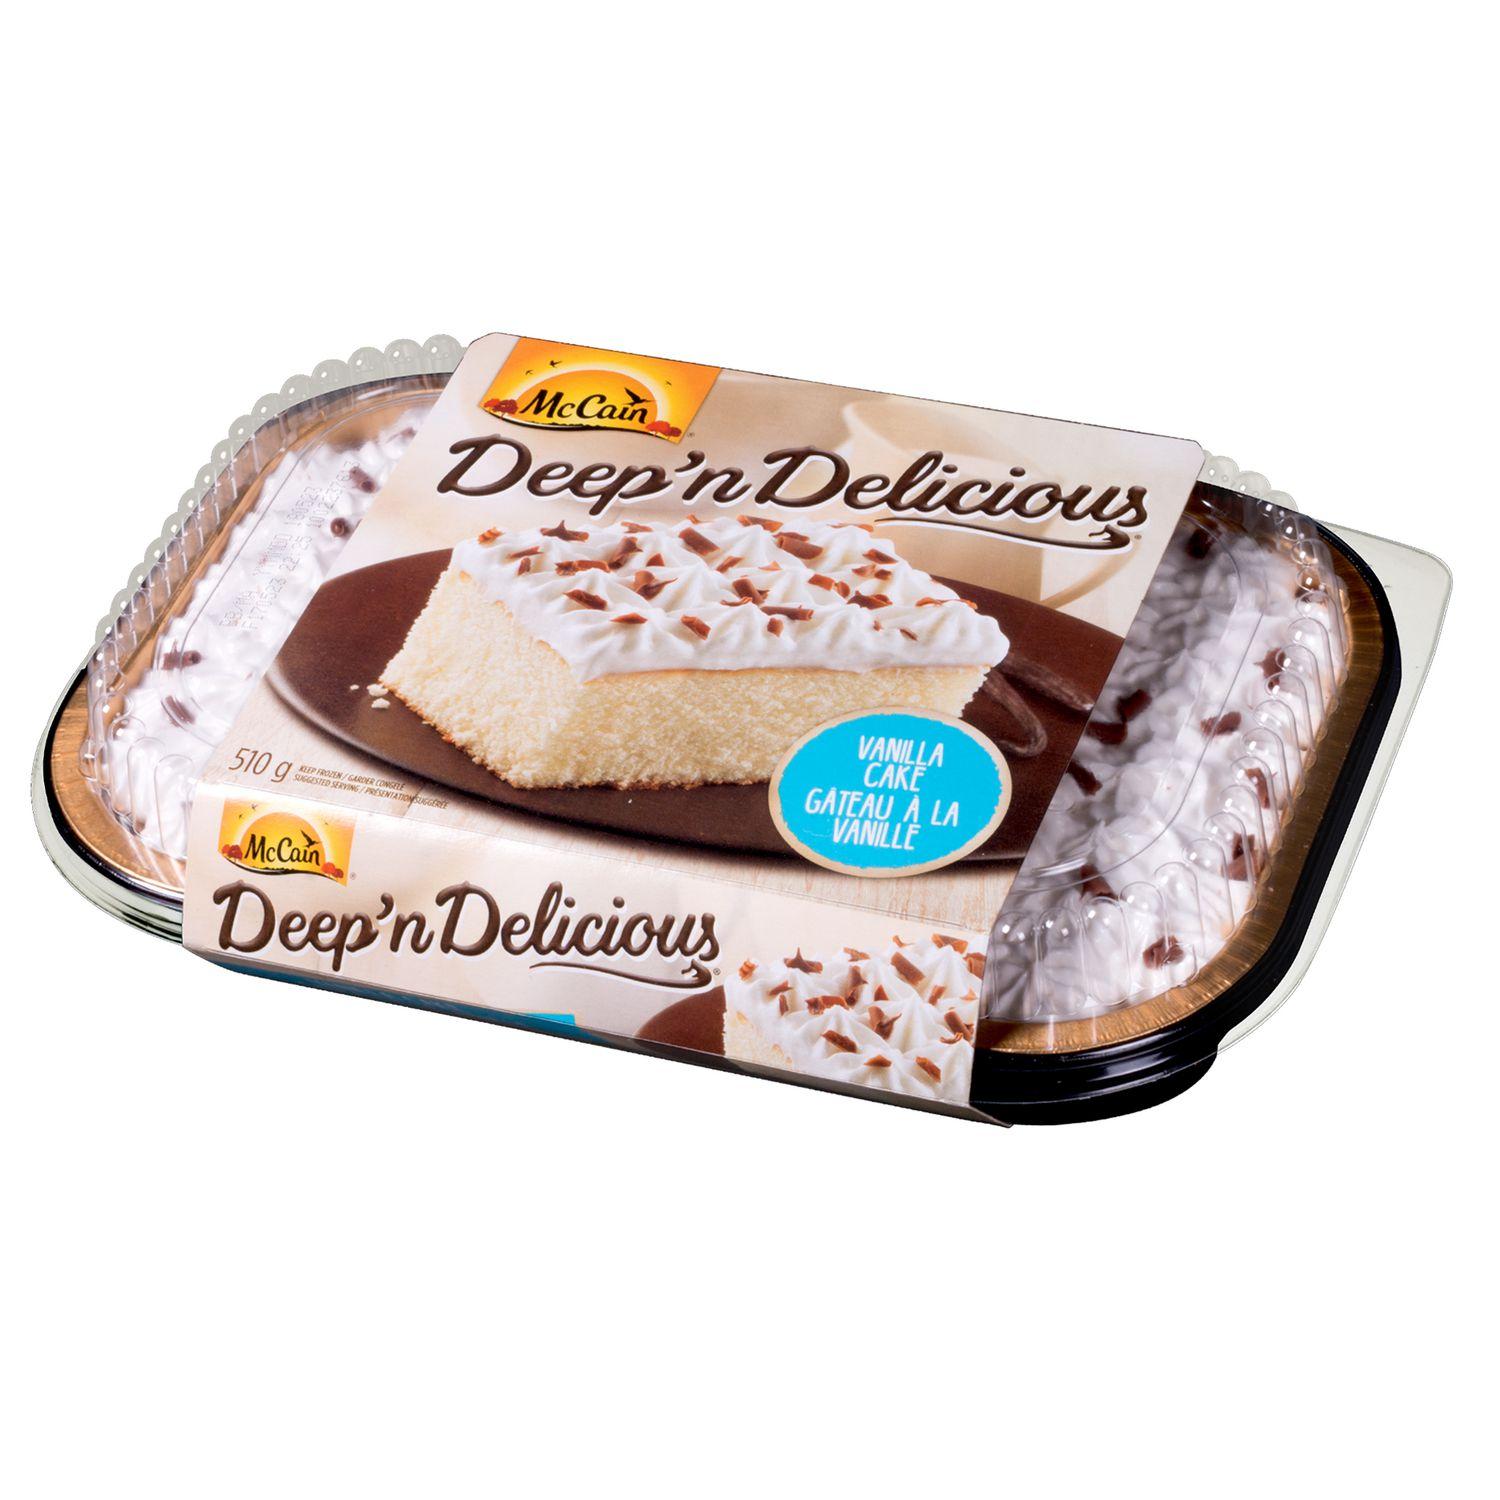 mccain-deep-n-delicious-vanilla-cake